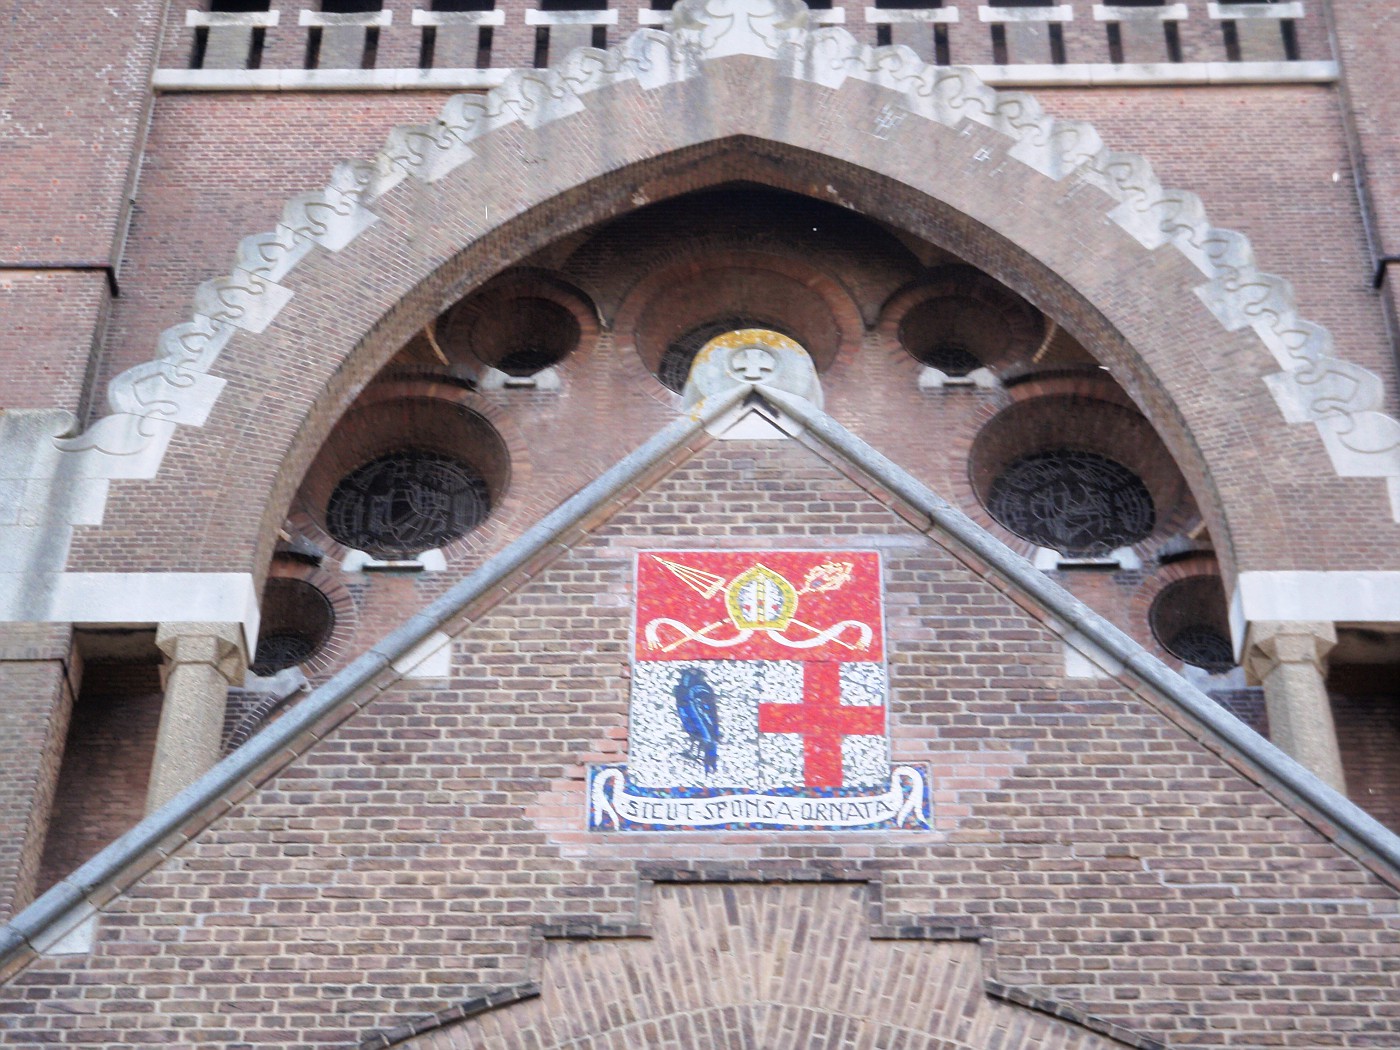 Kathedrale Basiliek St. Bavo, Haarlem